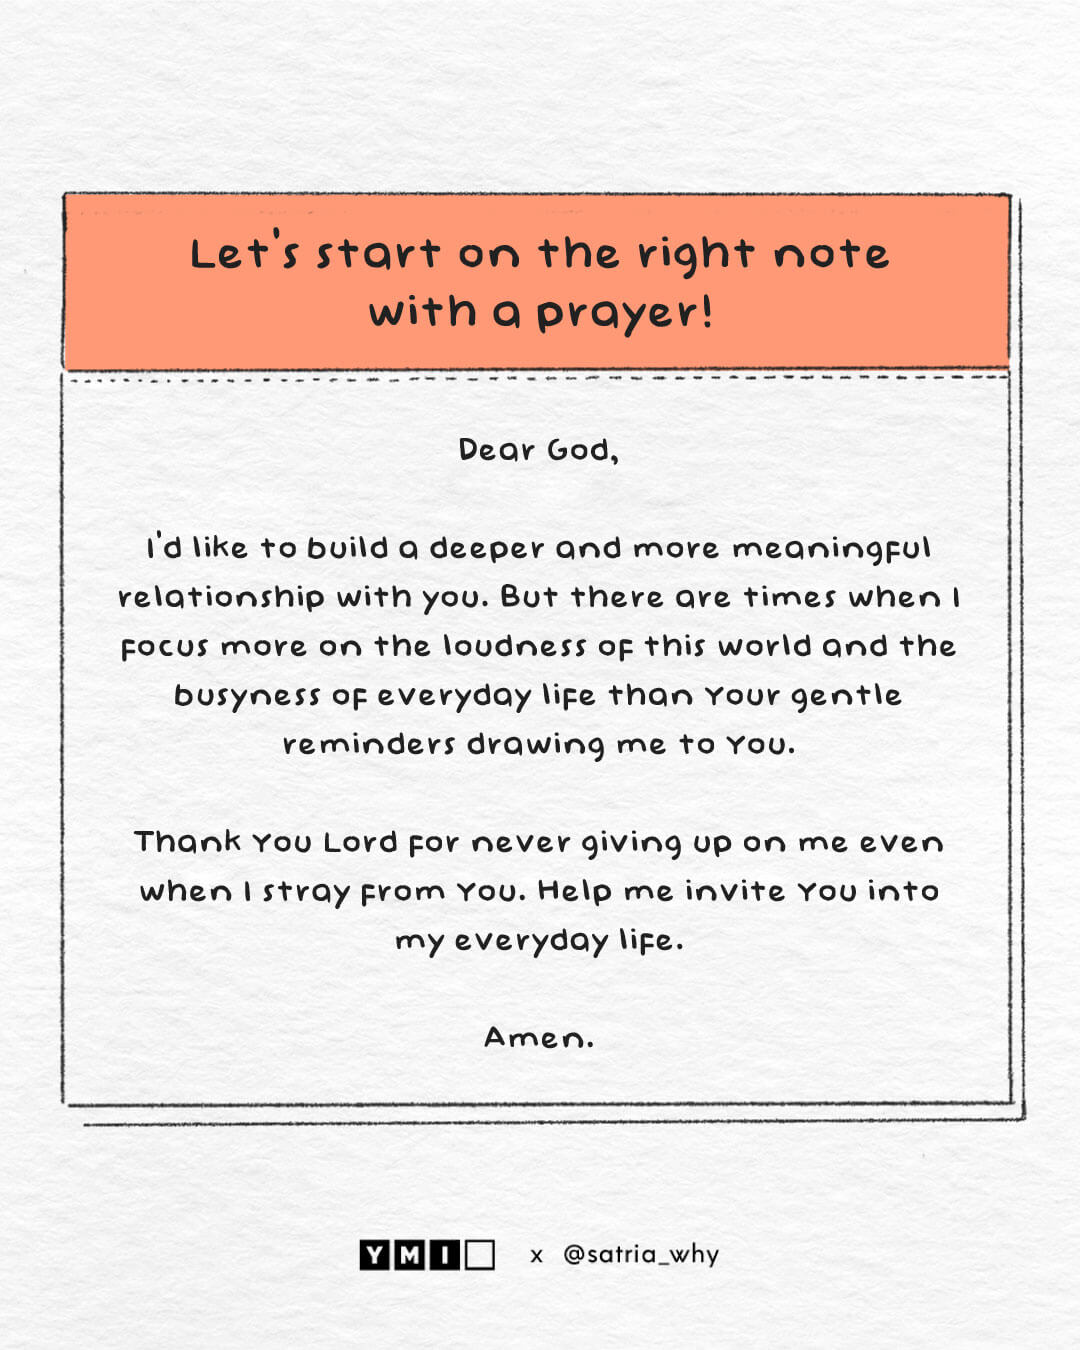 A prayer note